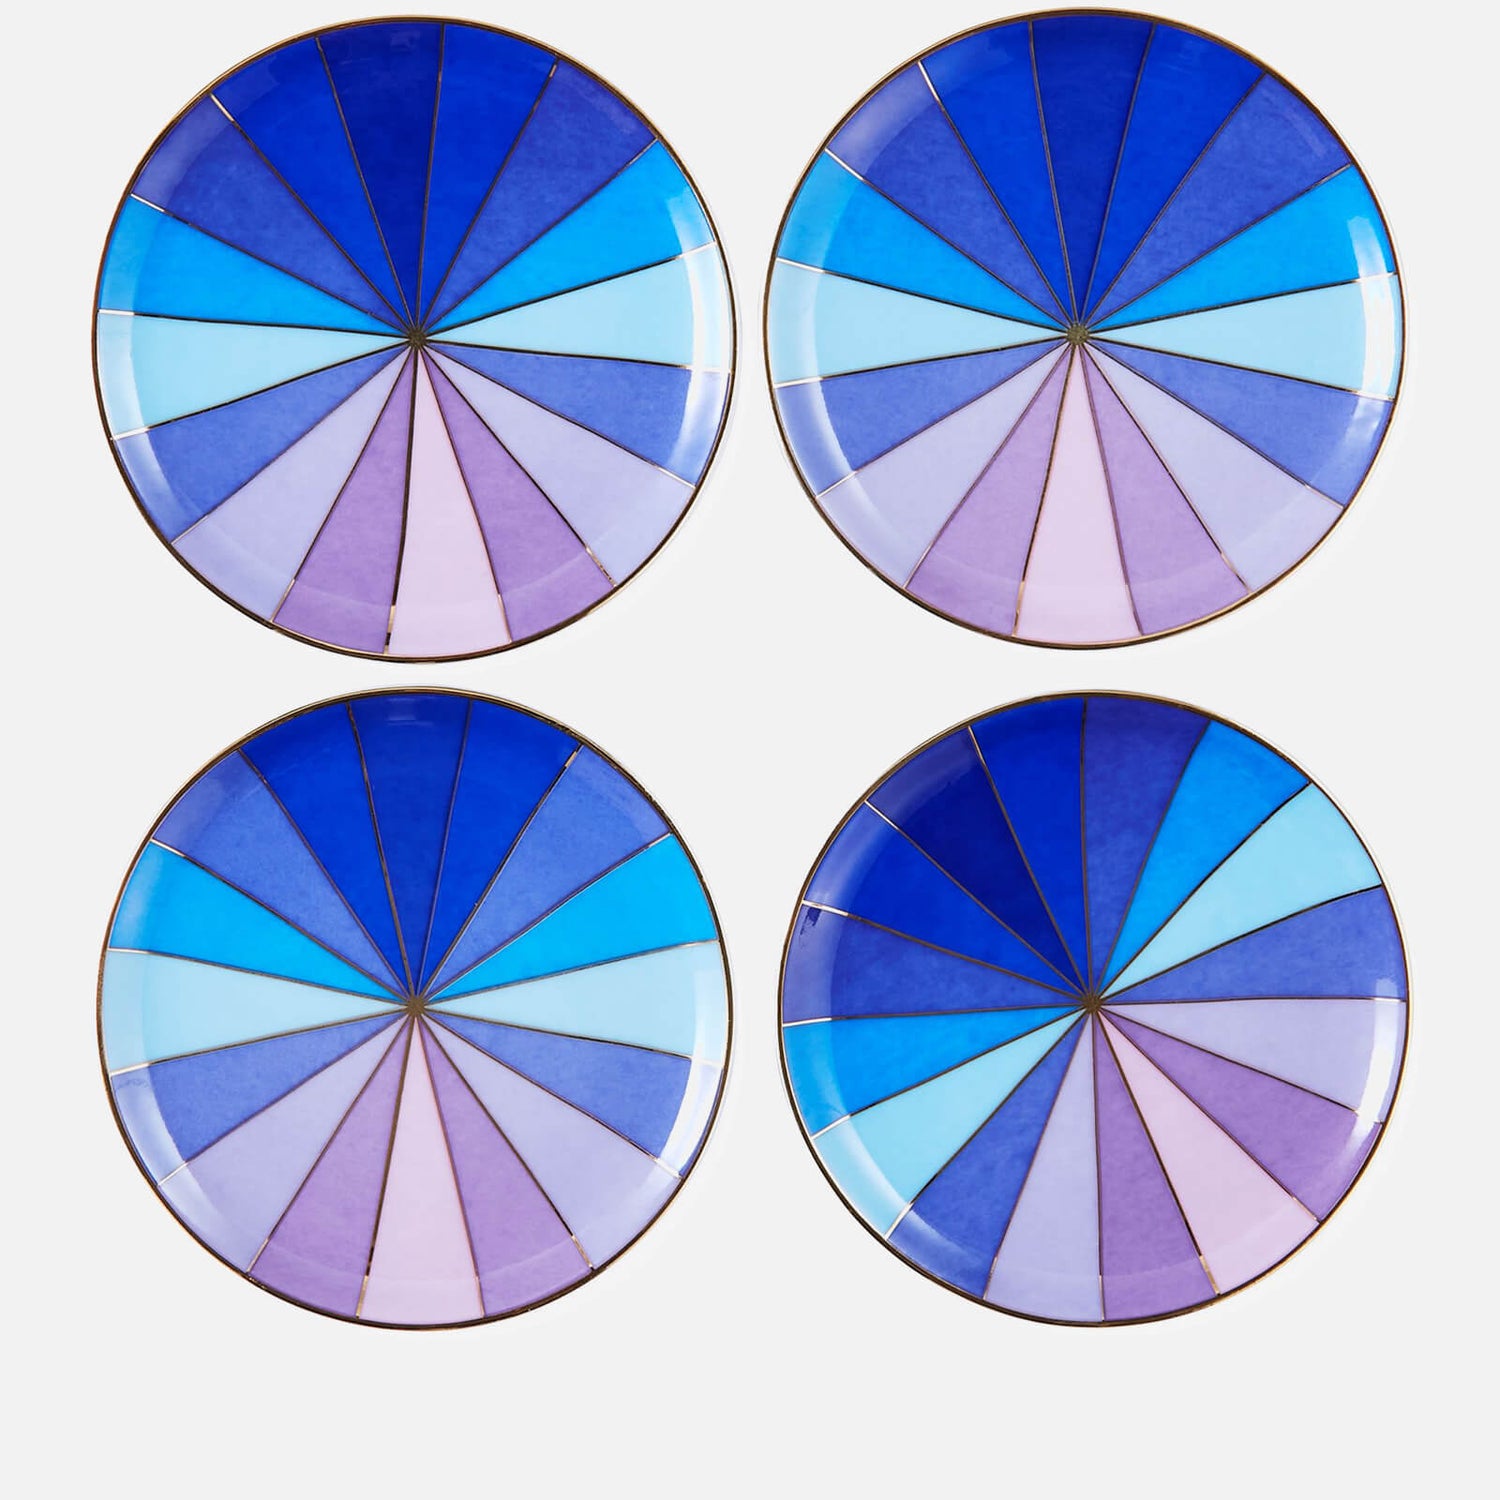 Jonathan Adler Scala Coasters - Set of 4 - Blue/Purple